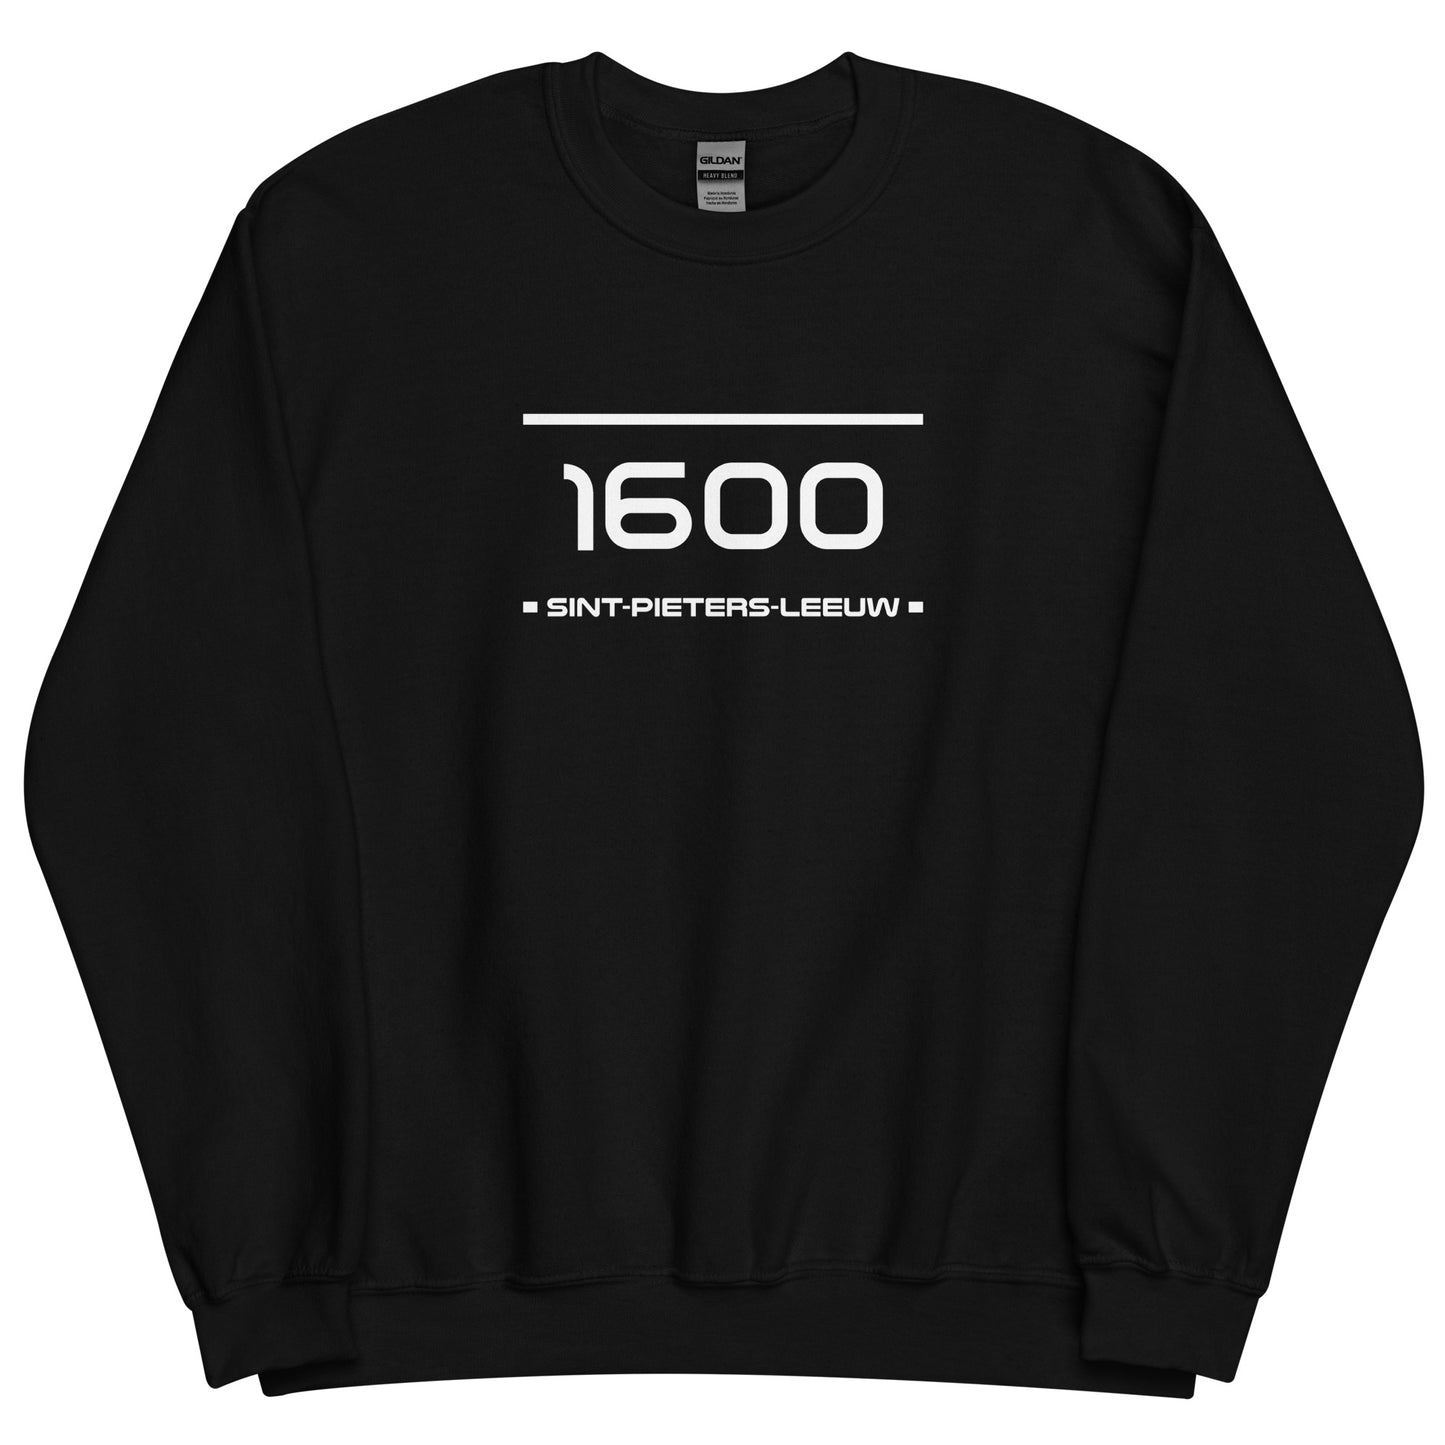 Sweater - 1600 - Sint-Pieters-Leeuw (M/V)